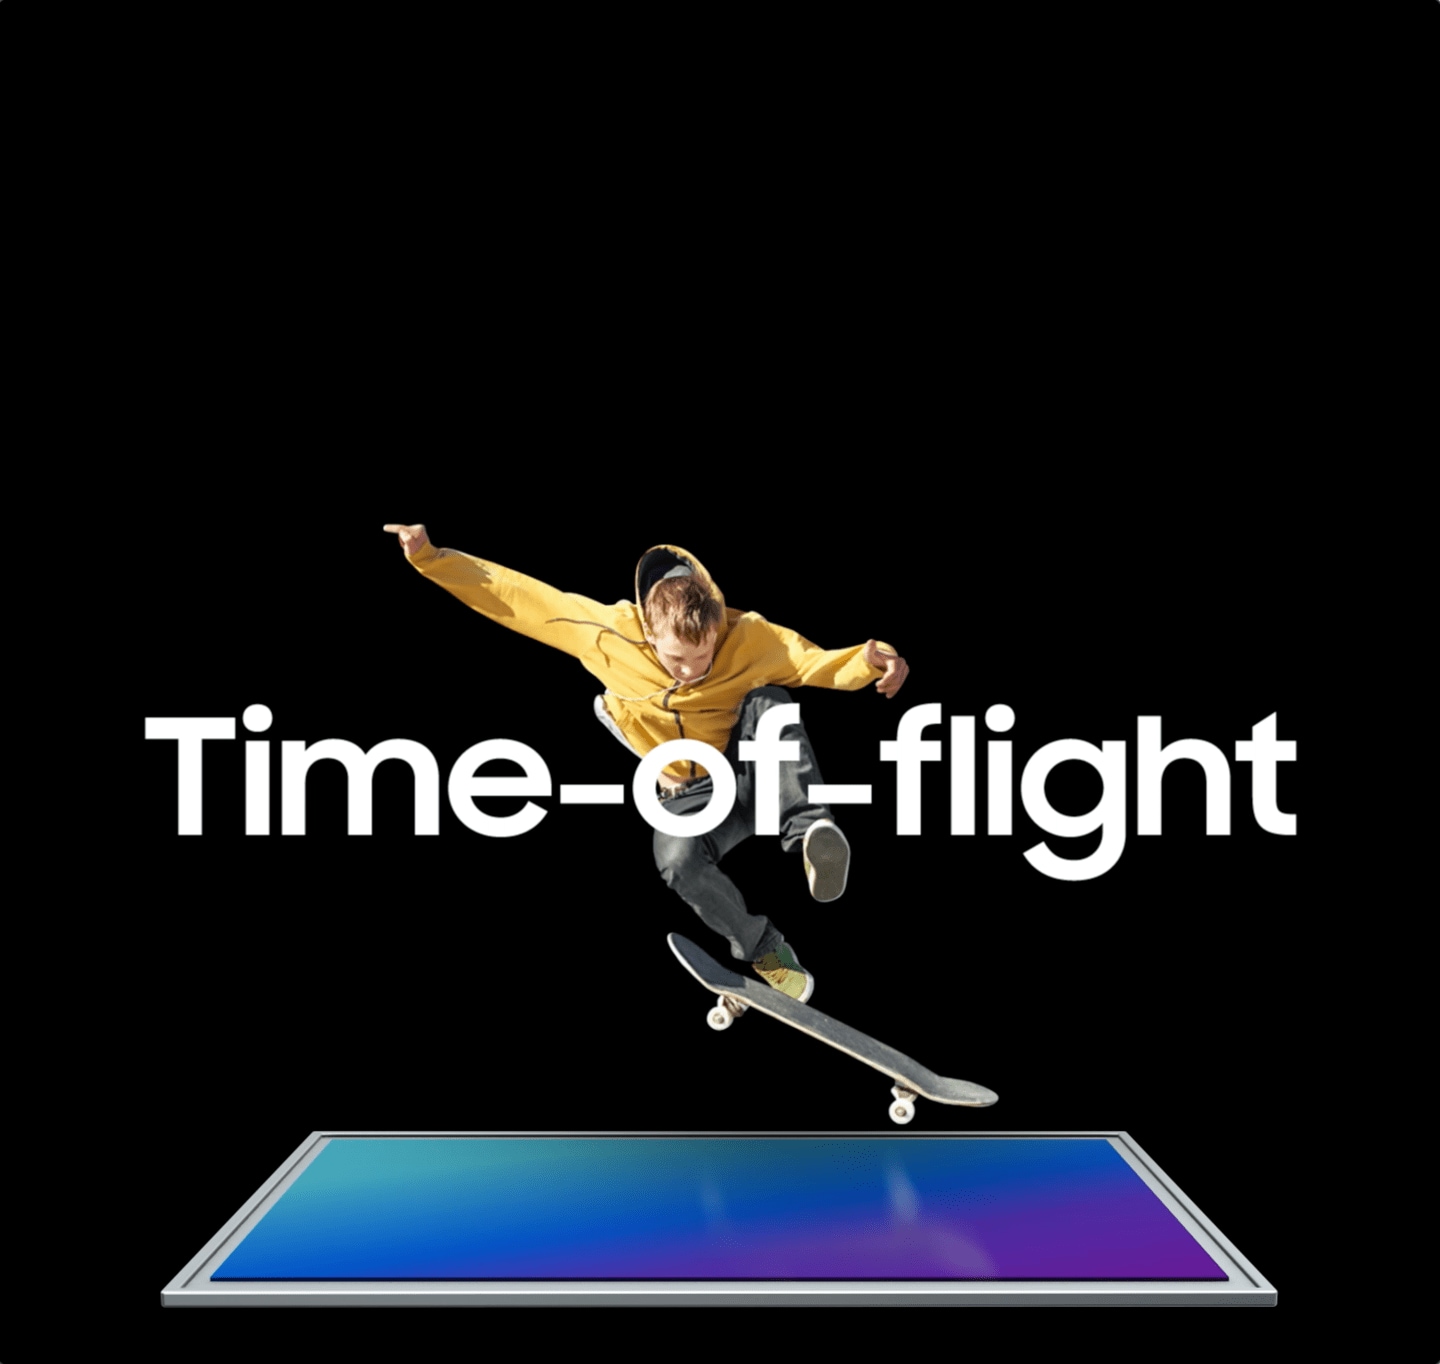 Samsung ToF(Time-of-Flight) image sensor